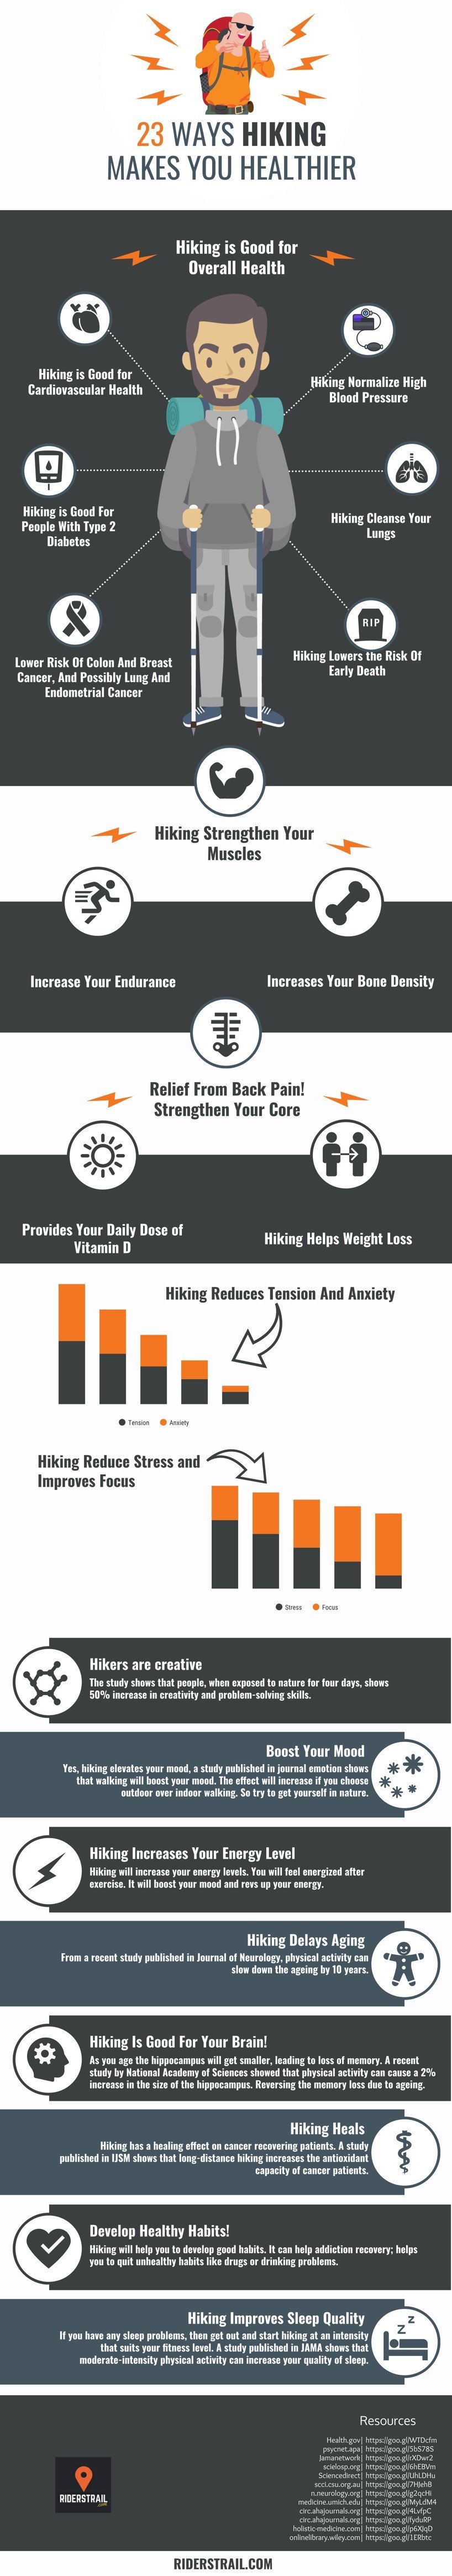 Hiking benefits: 23 ways hiking makes you healthier